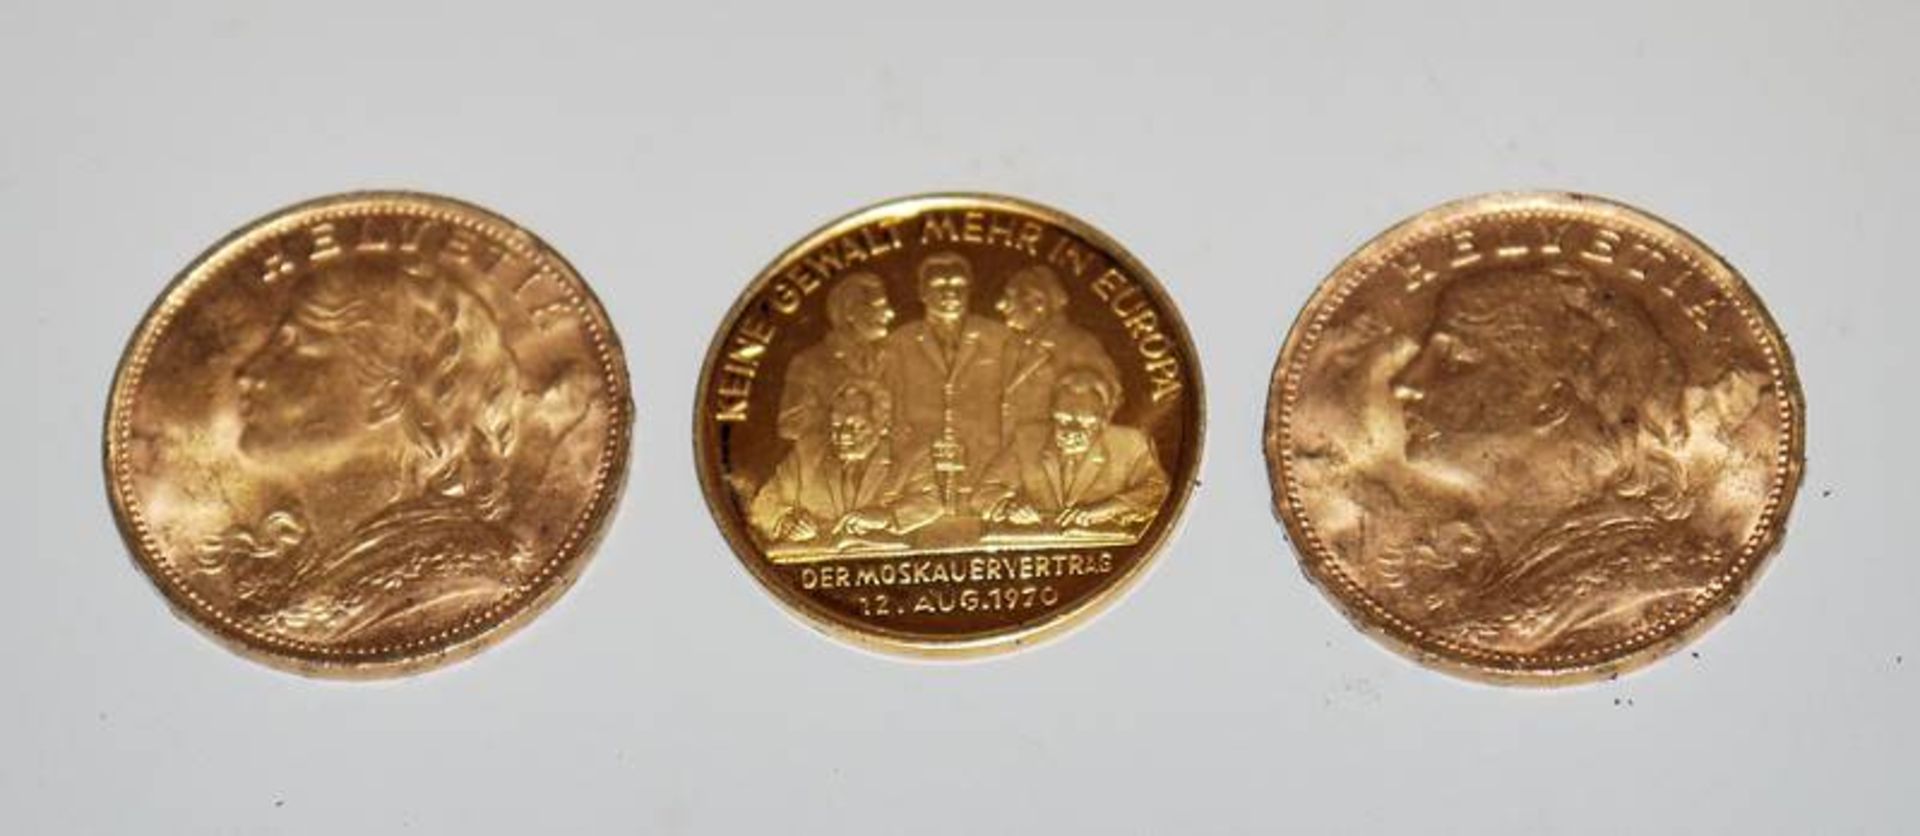 Zwei Goldmünzen "Gold Vreneli" 20 Franken Schweiz-Eidgenossenschaft 1935 B & Goldmedaille Der Moska